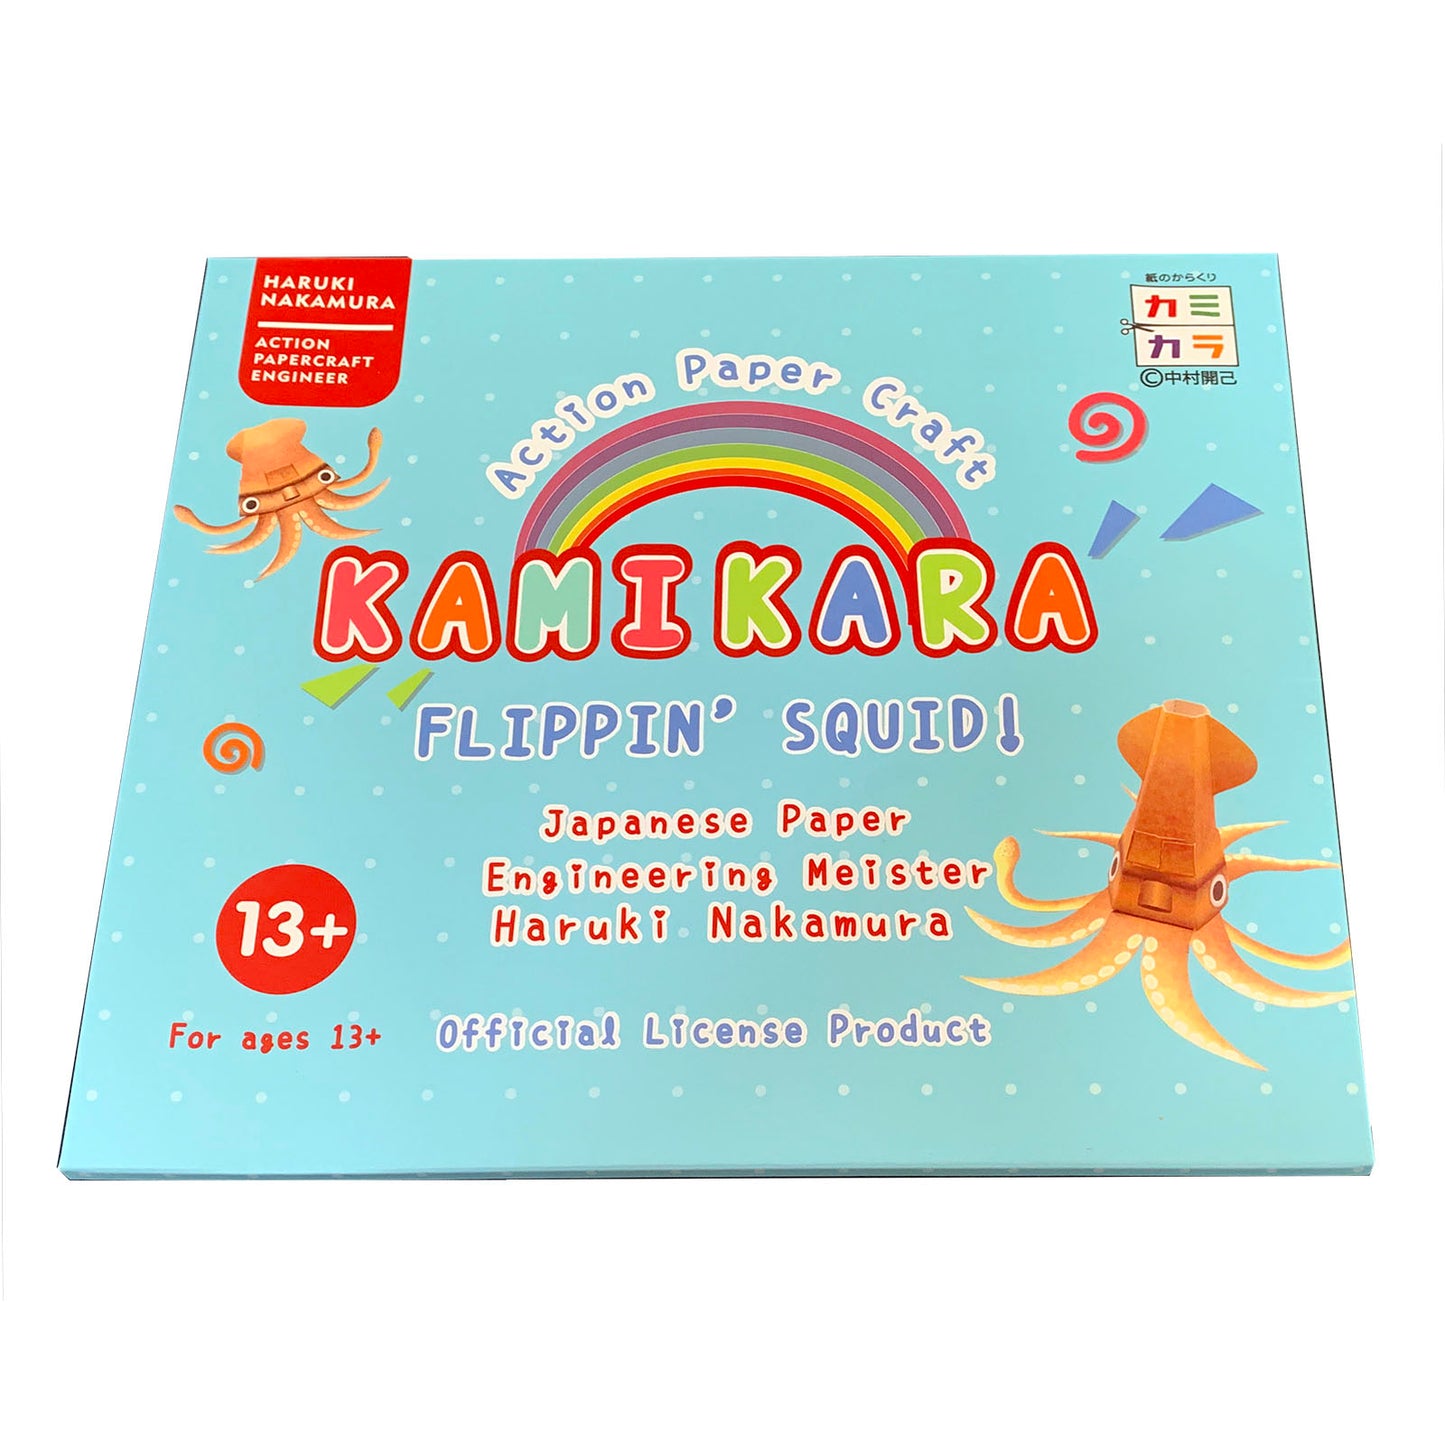 Packaging of Kamikara Flippin Squid origami toy